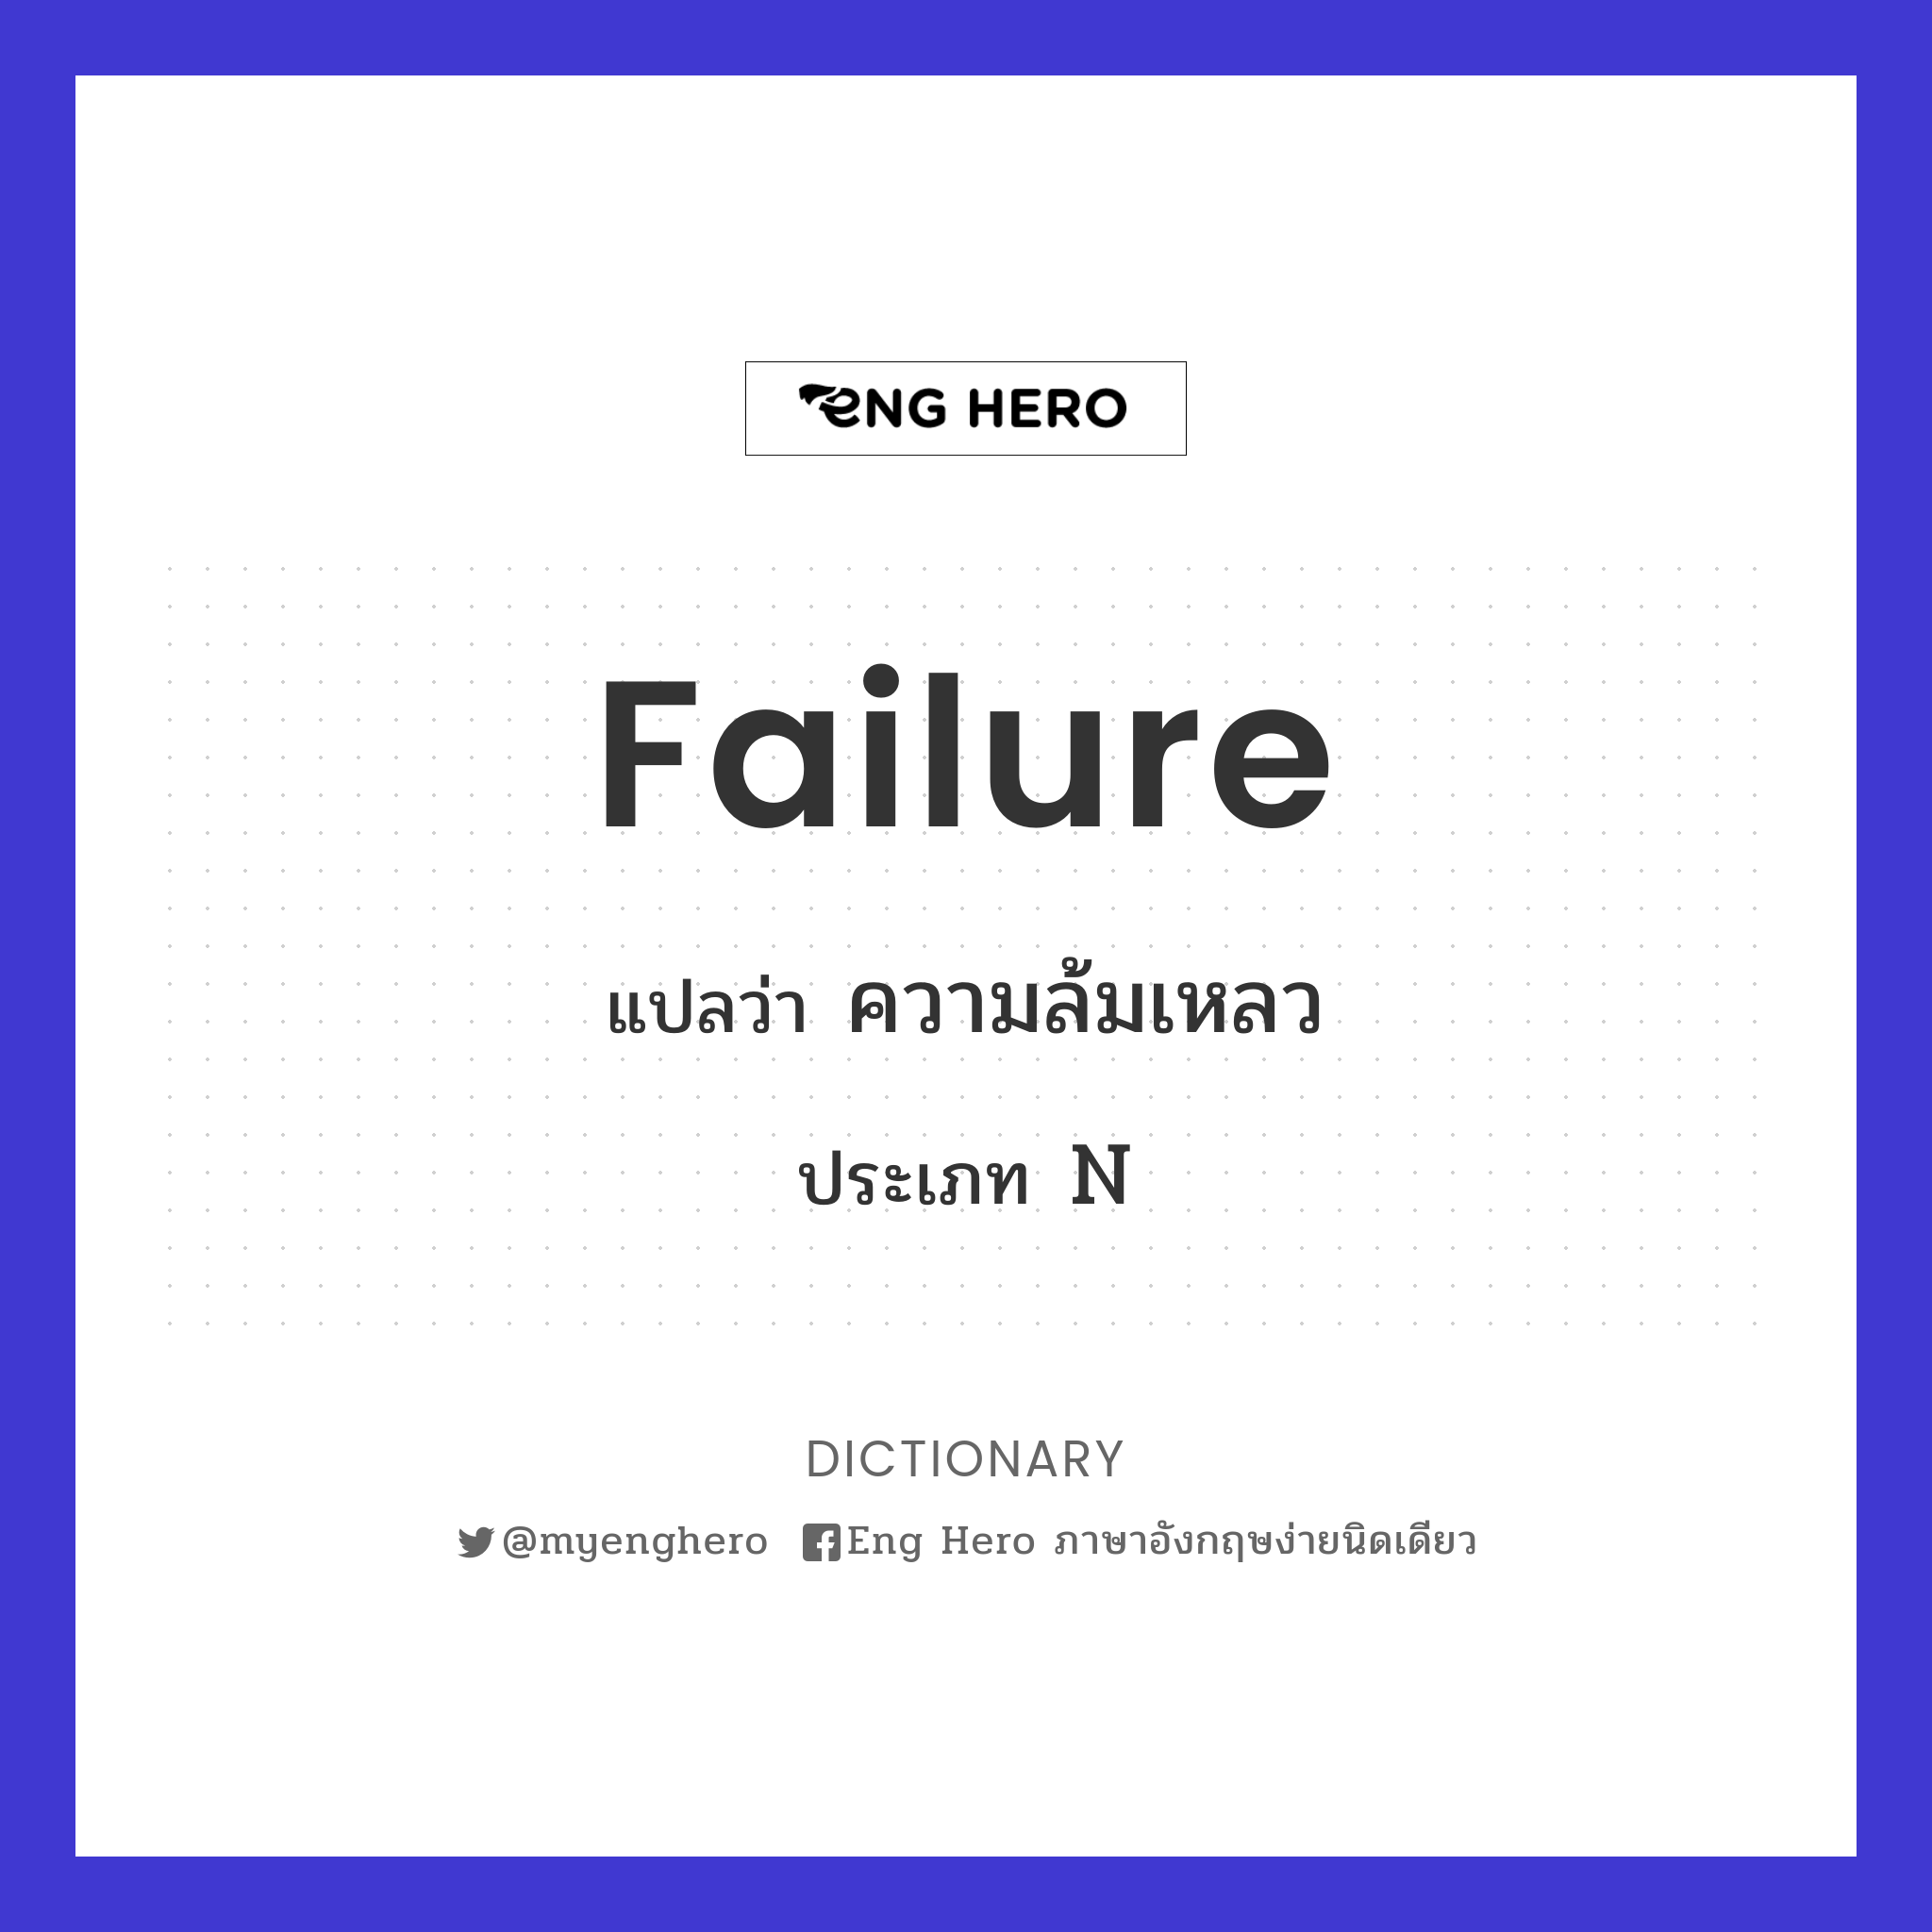 failure